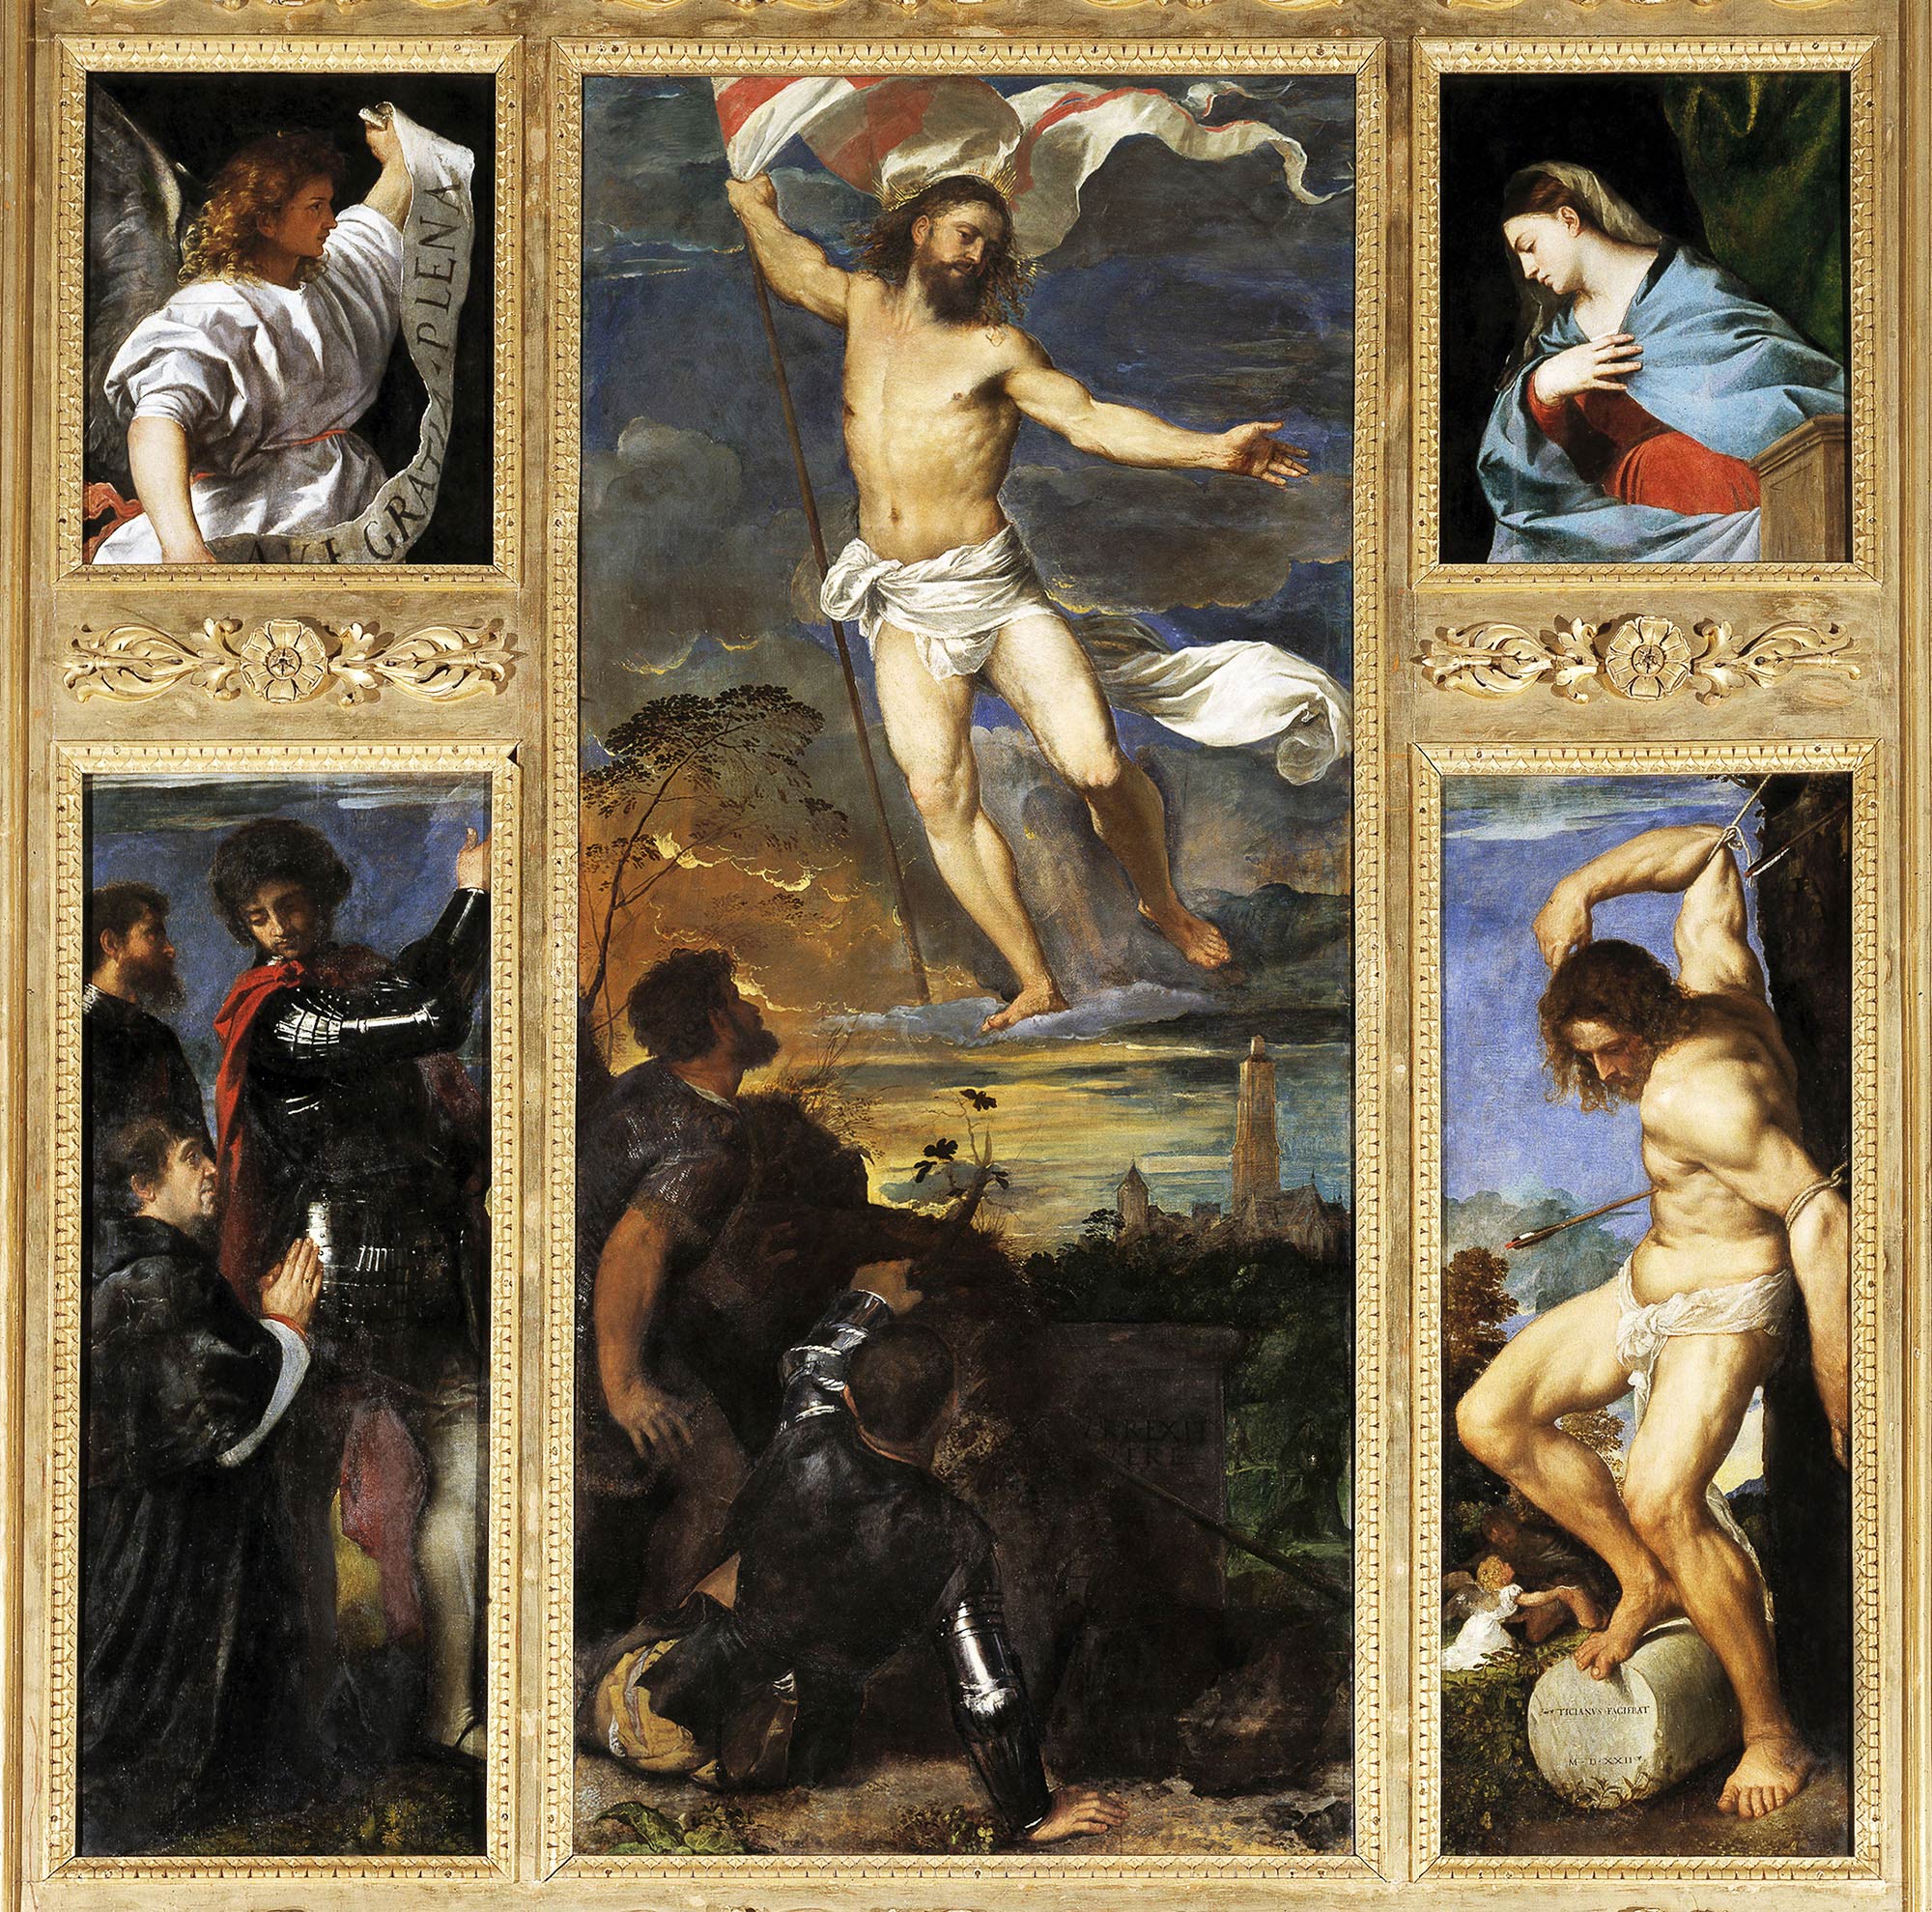 Titian, Averoldi Polyptych (1520-1522; oil on panel 278 x 292 cm; Brescia, Santi Nazaro e Celso)